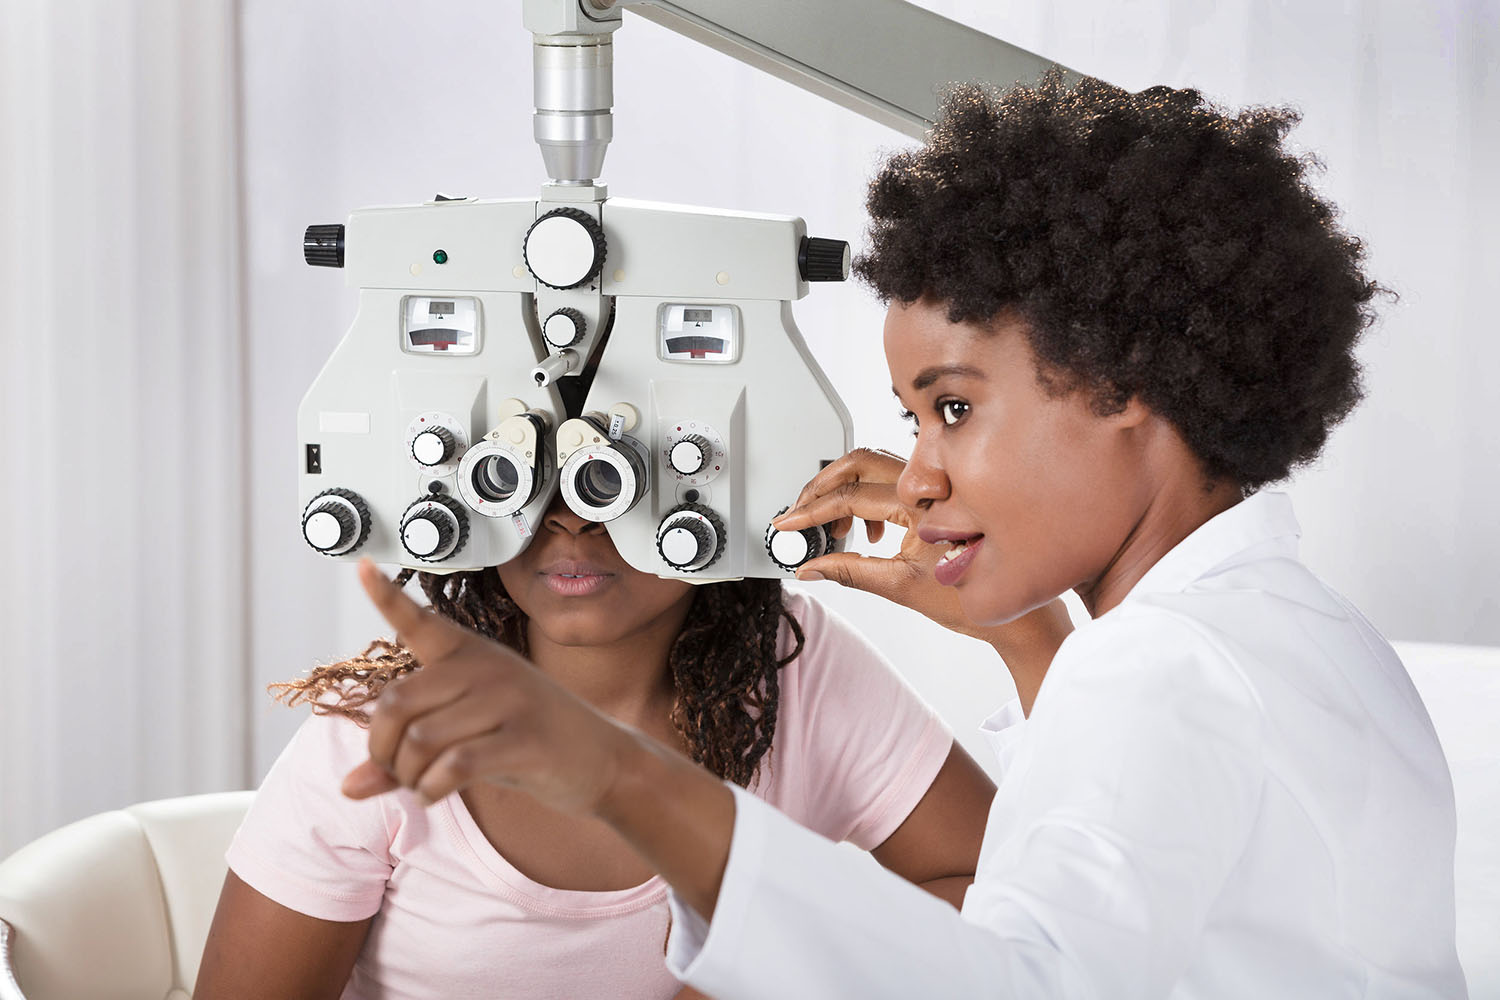 Optometrist examining patient's eyes.